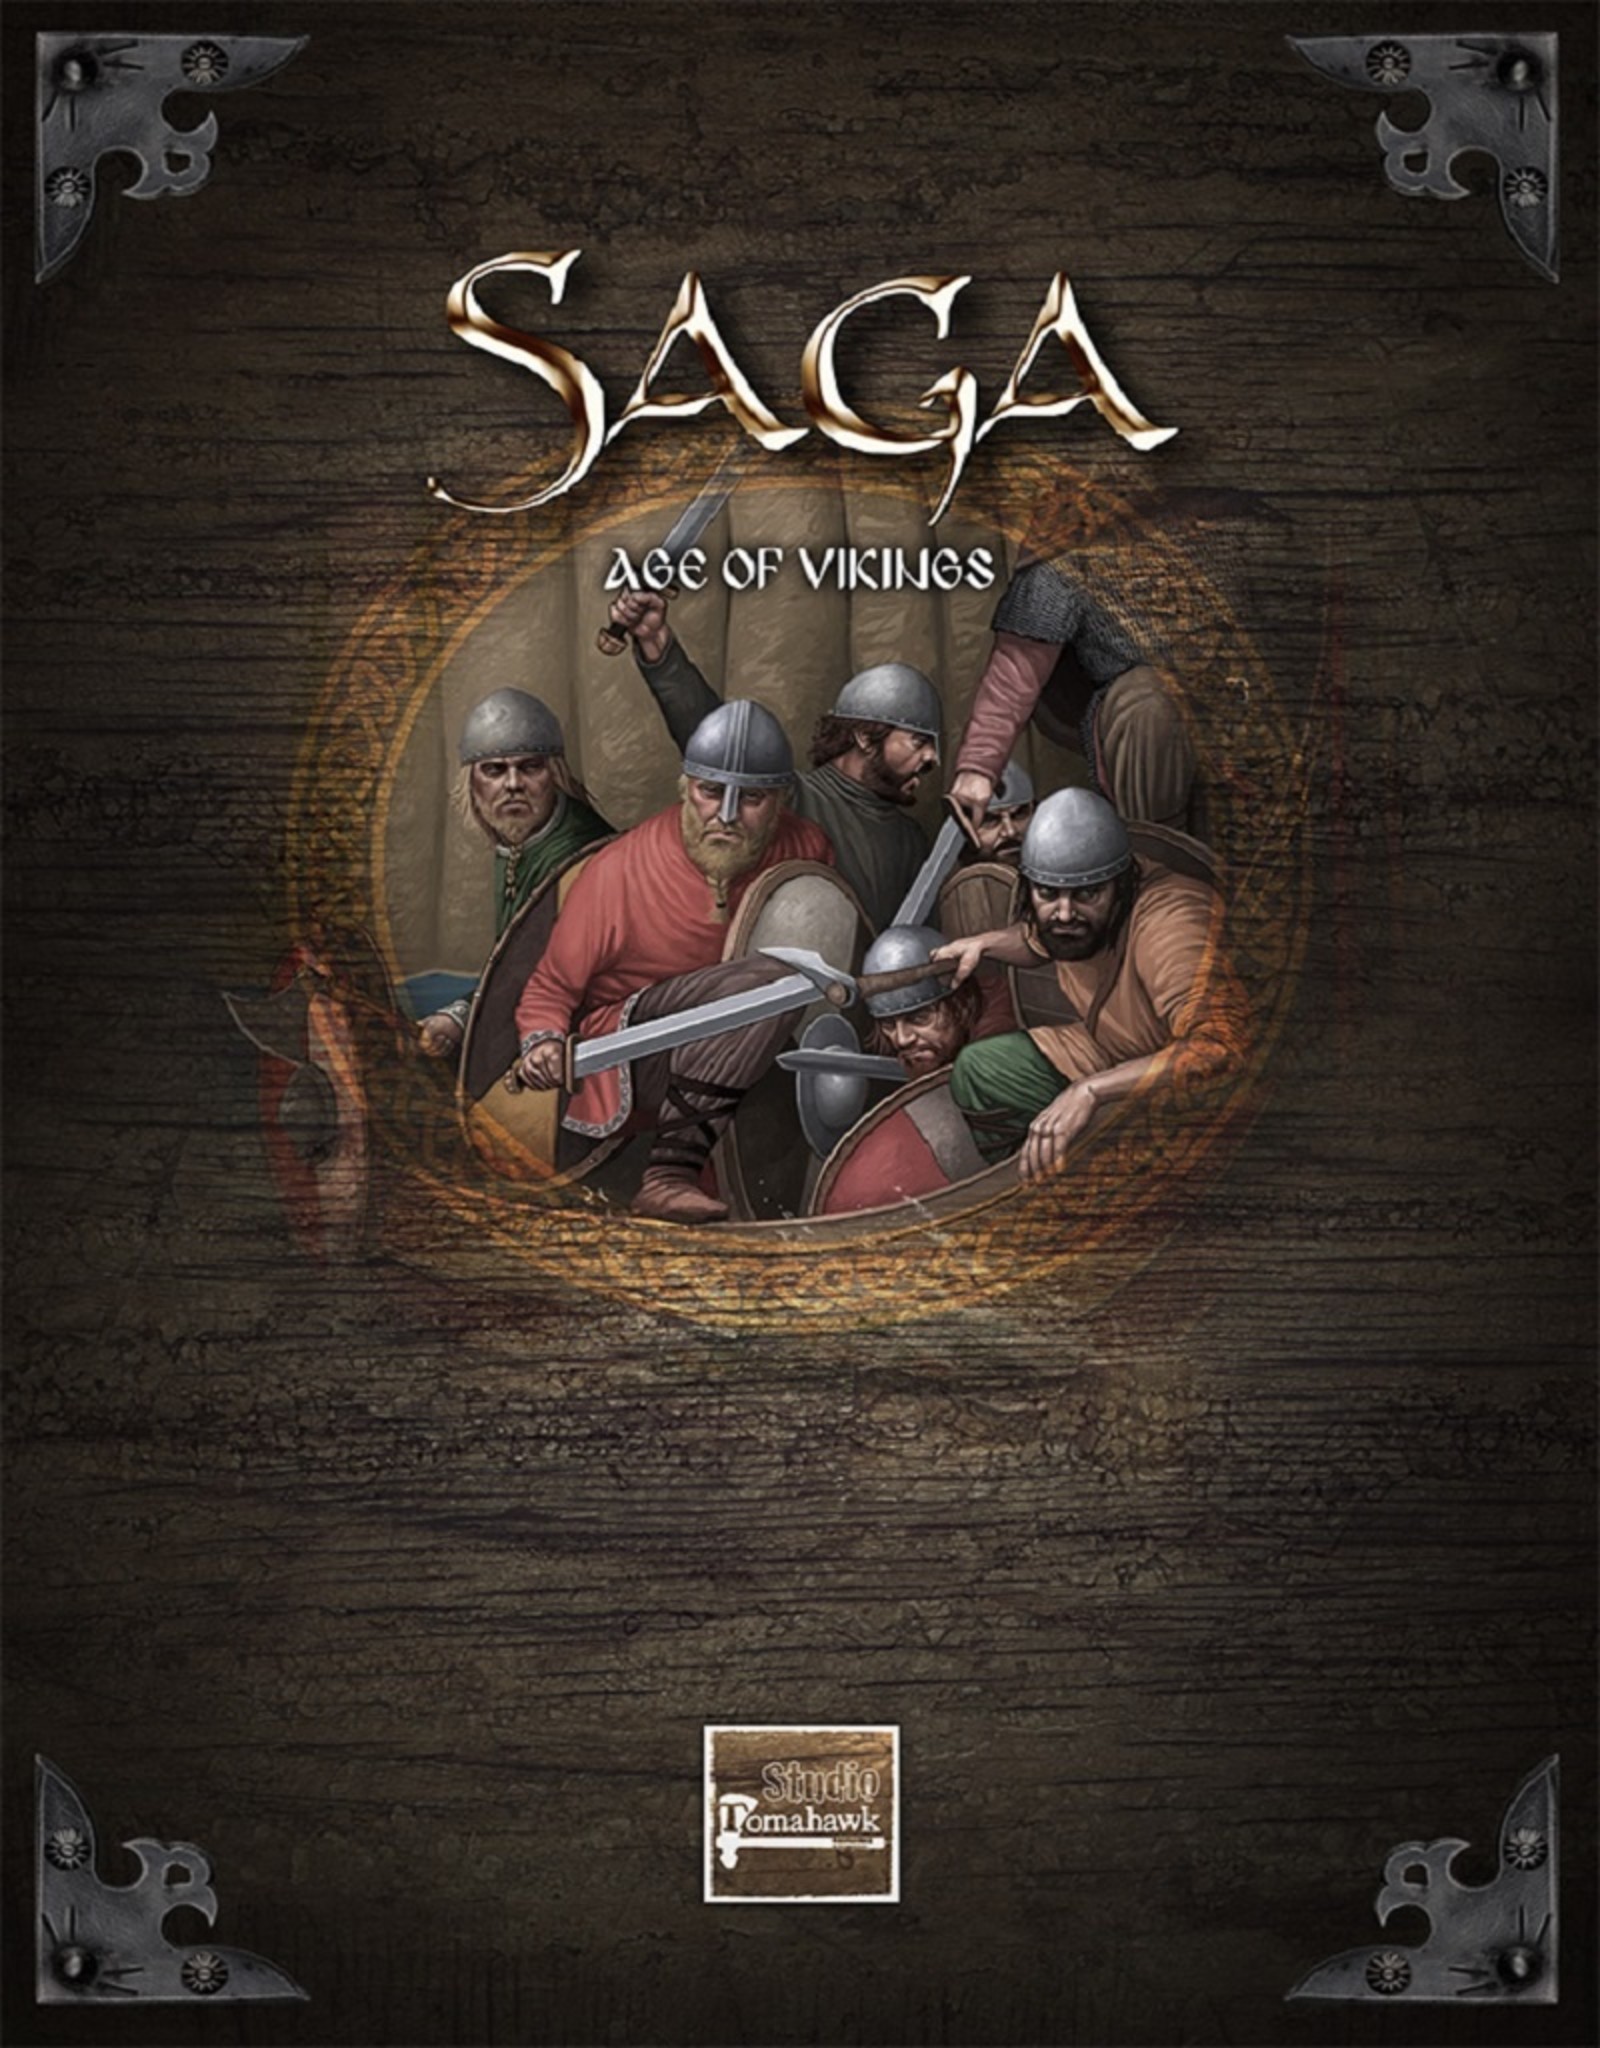 Studio Tomahawk Saga - Age of Vikings